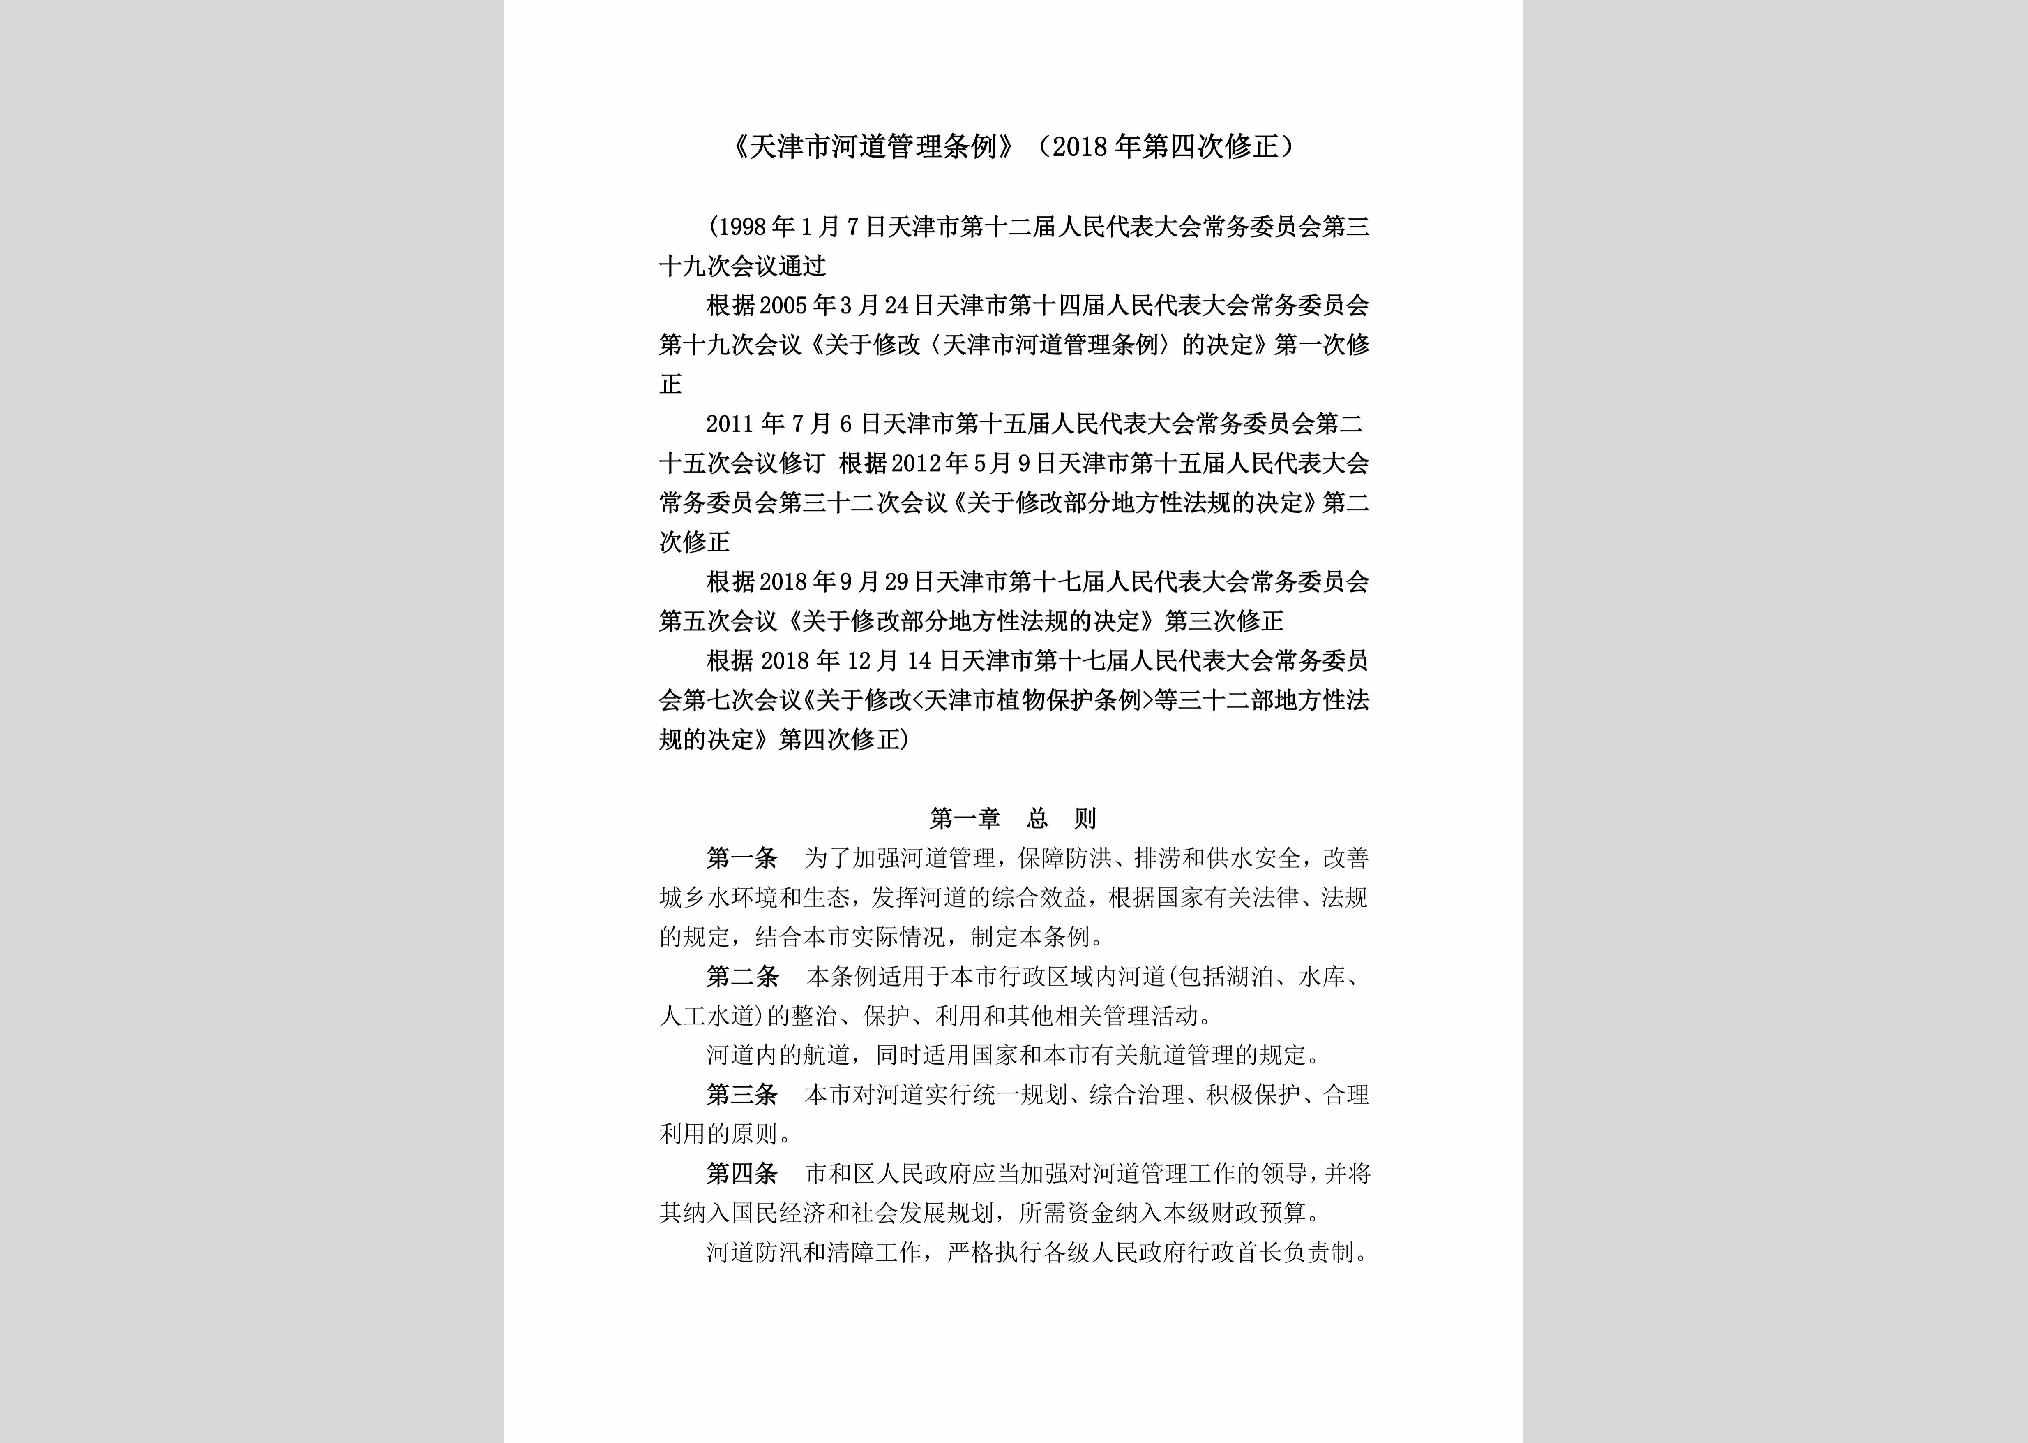 TJSHDGLT：《天津市河道管理条例》（2018年第四次修正）